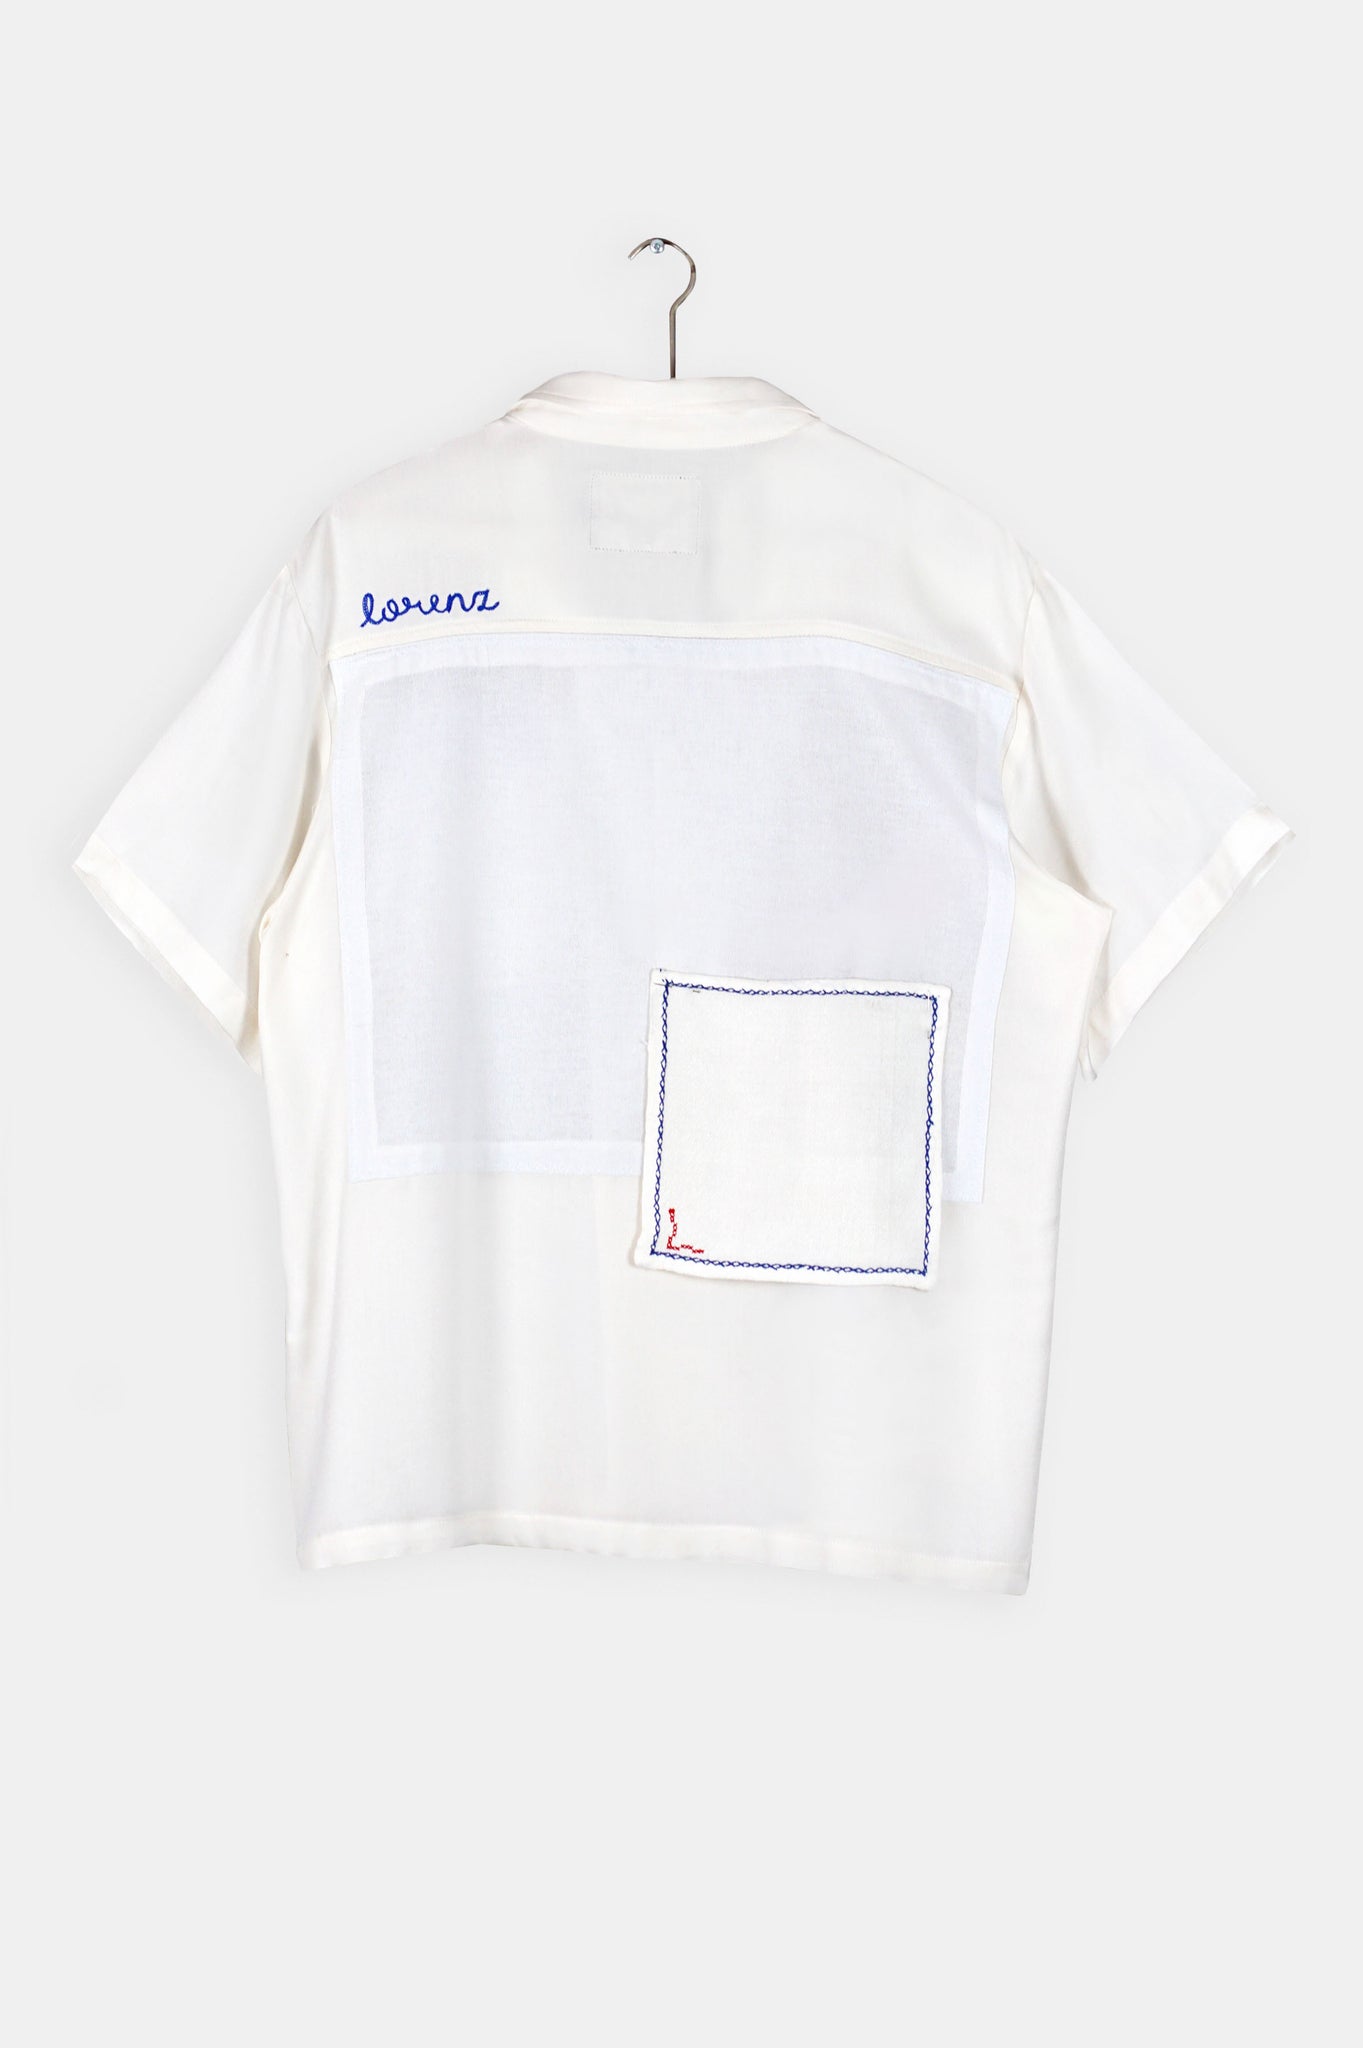 Frankie Thorp x lorenz Shirt 1 - lorenz Menswear